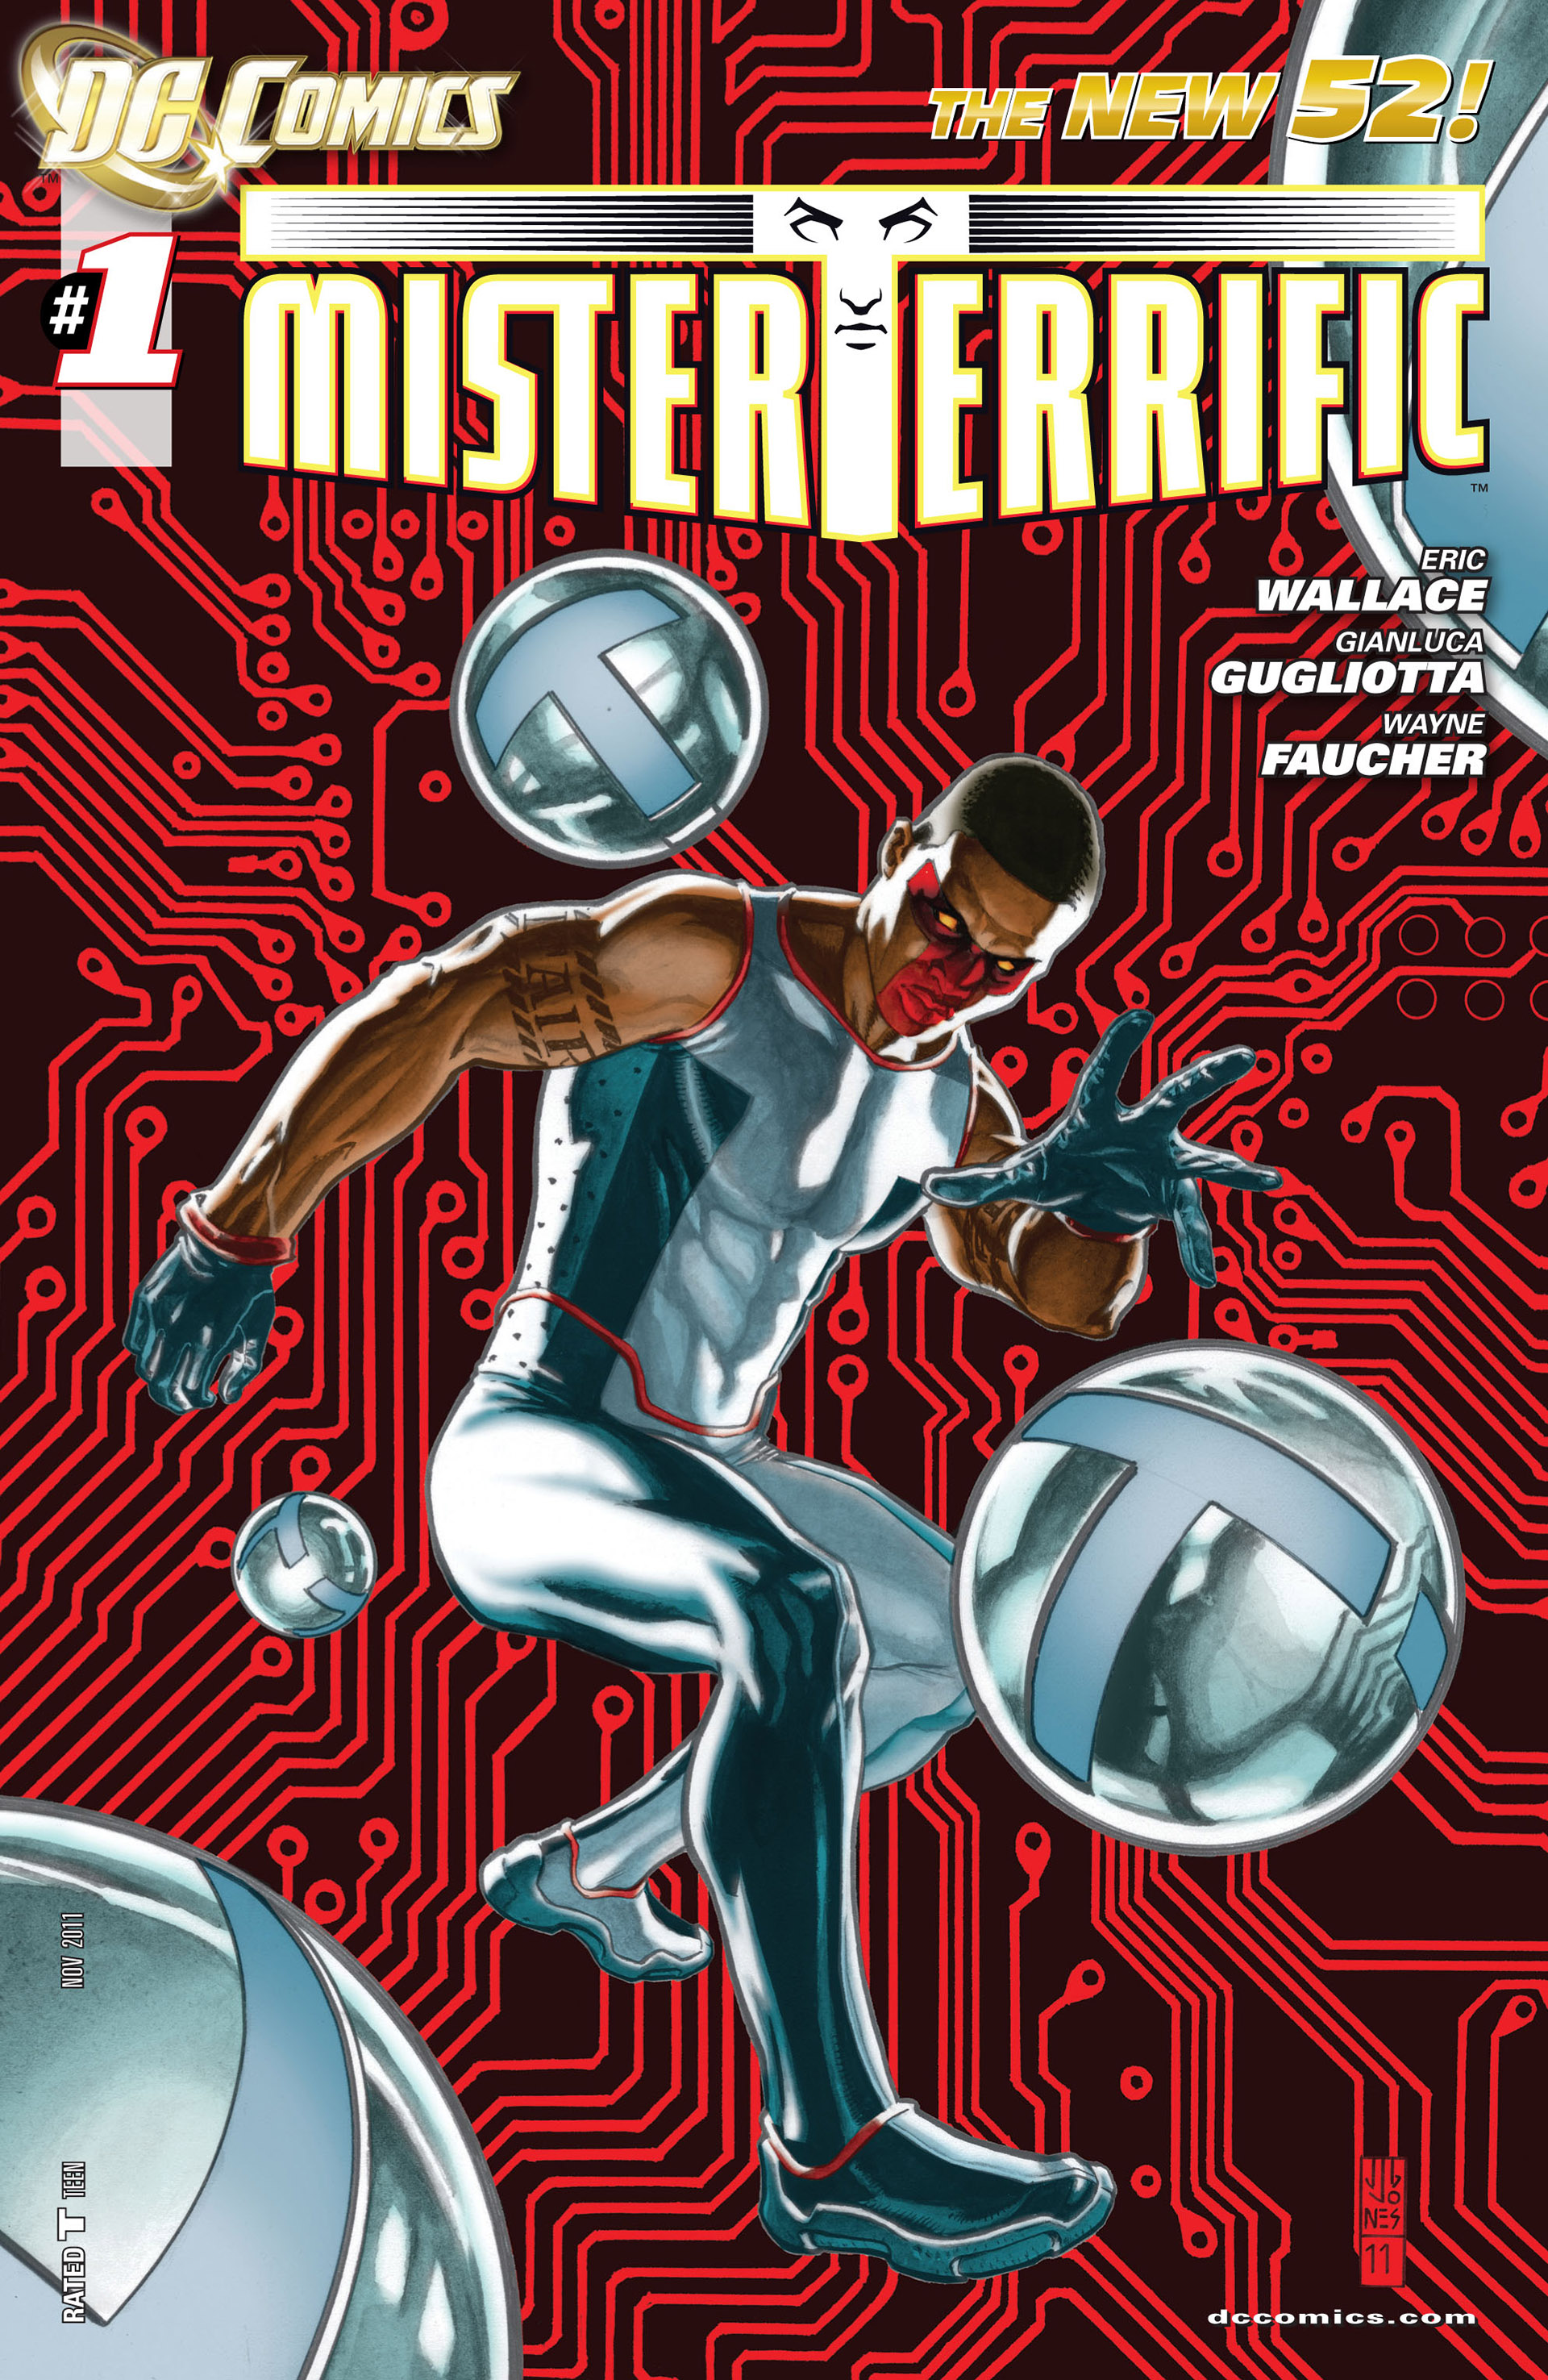 Read online Mister Terrific comic -  Issue #1 - 2